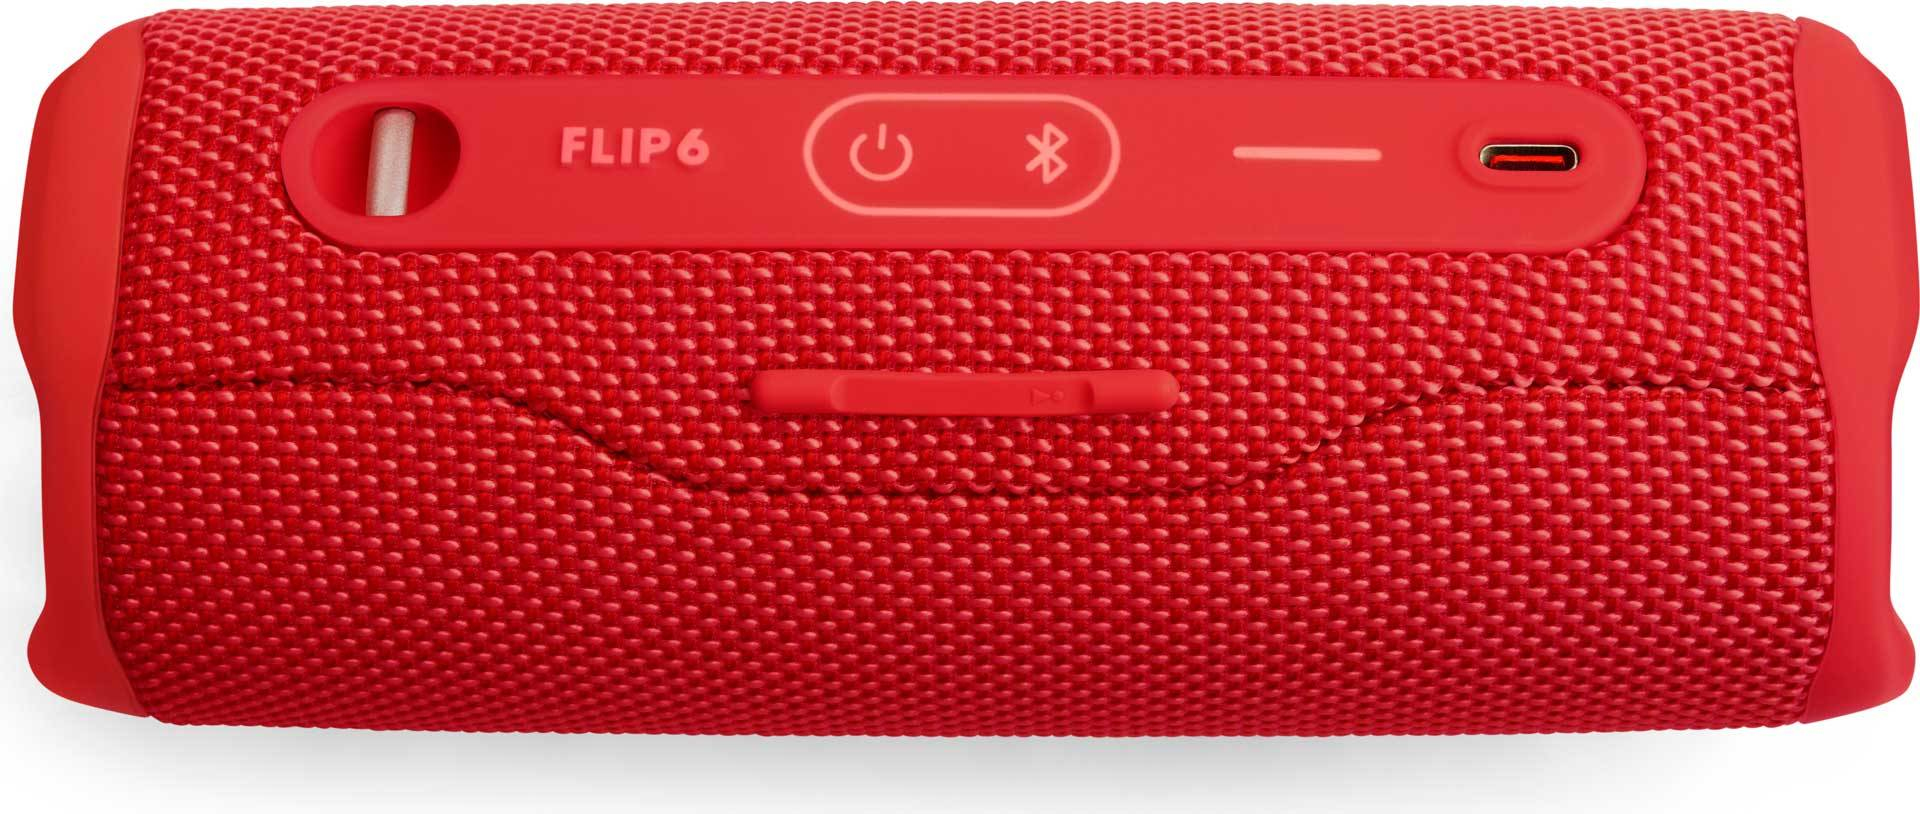 JBL bluetooth speaker flip 6 red